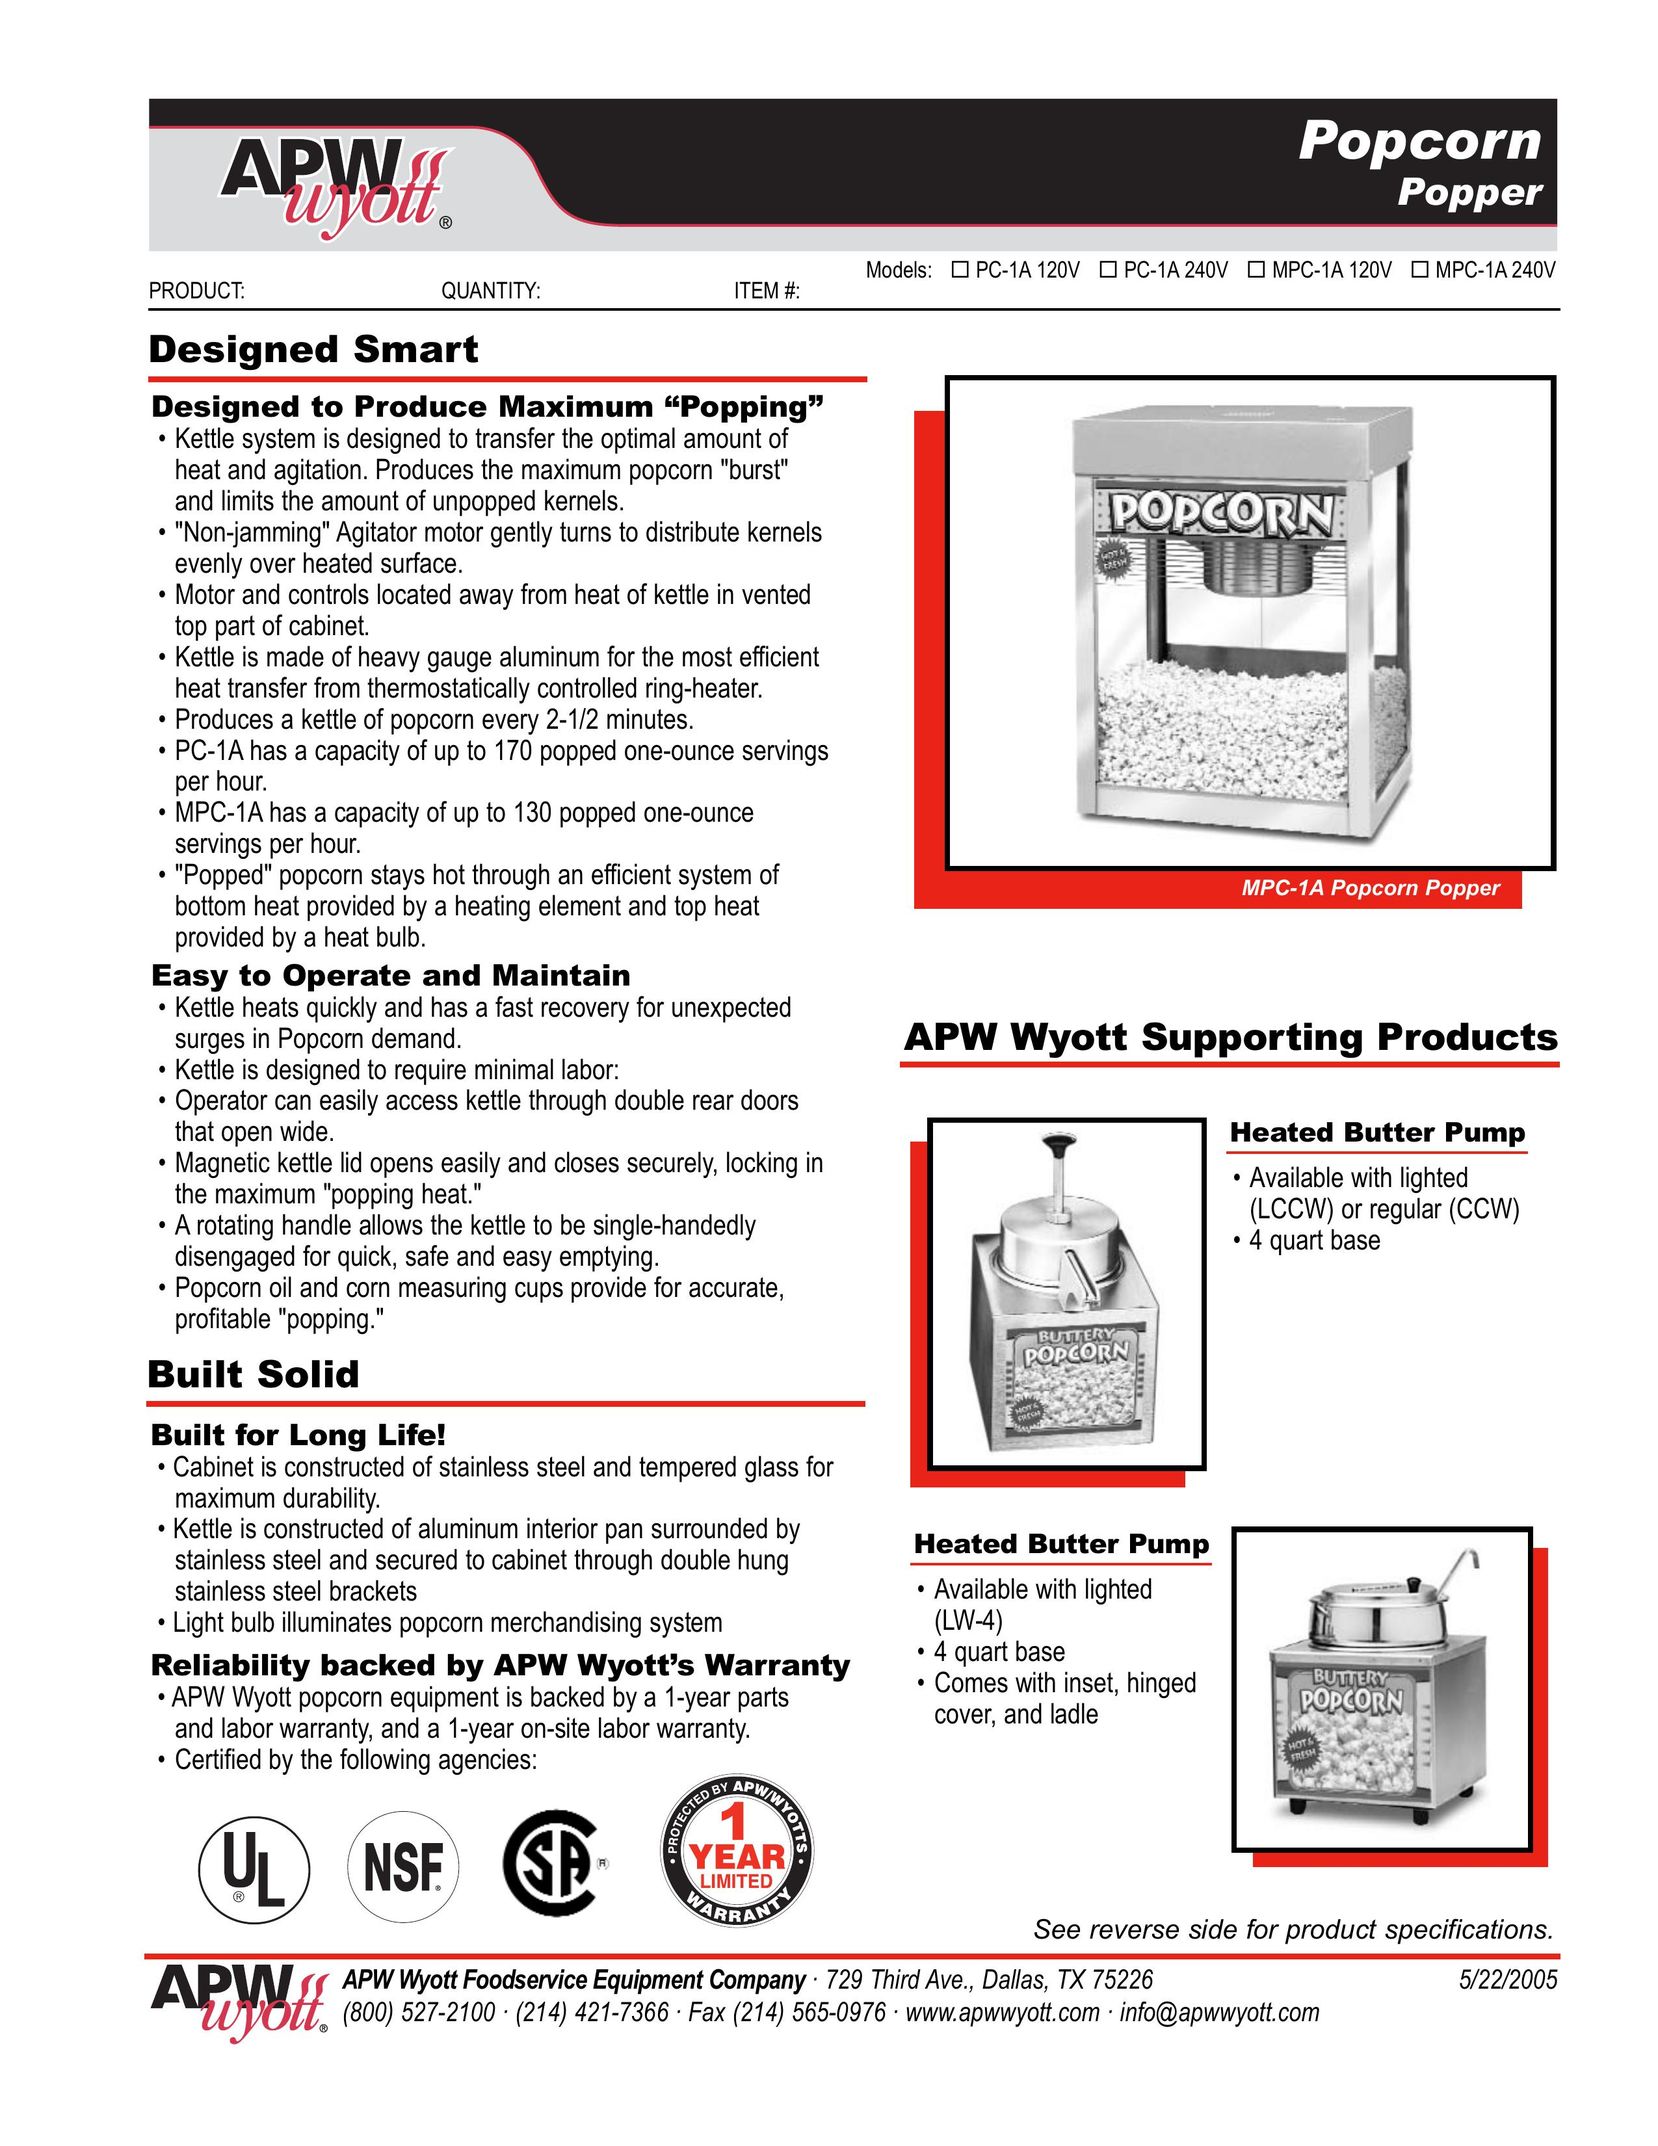 APW Wyott MPC-1A 240V Popcorn Poppers User Manual